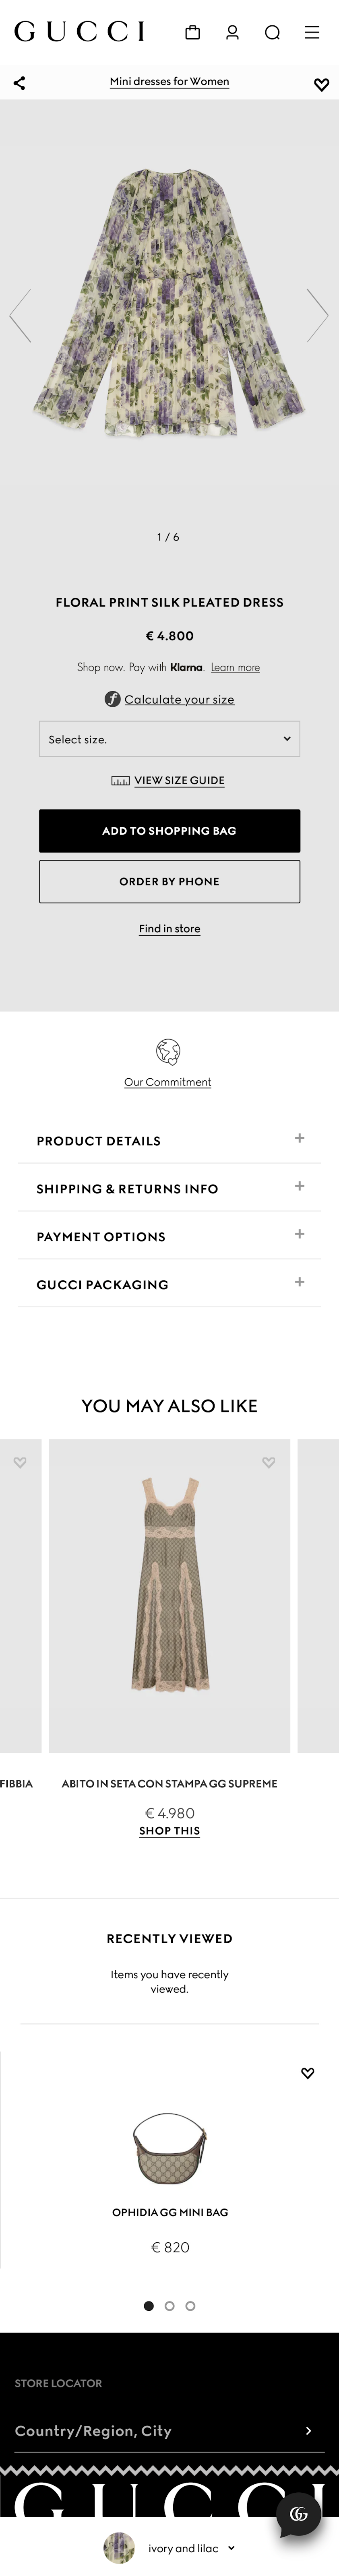 Mobile screenshot of Gucci